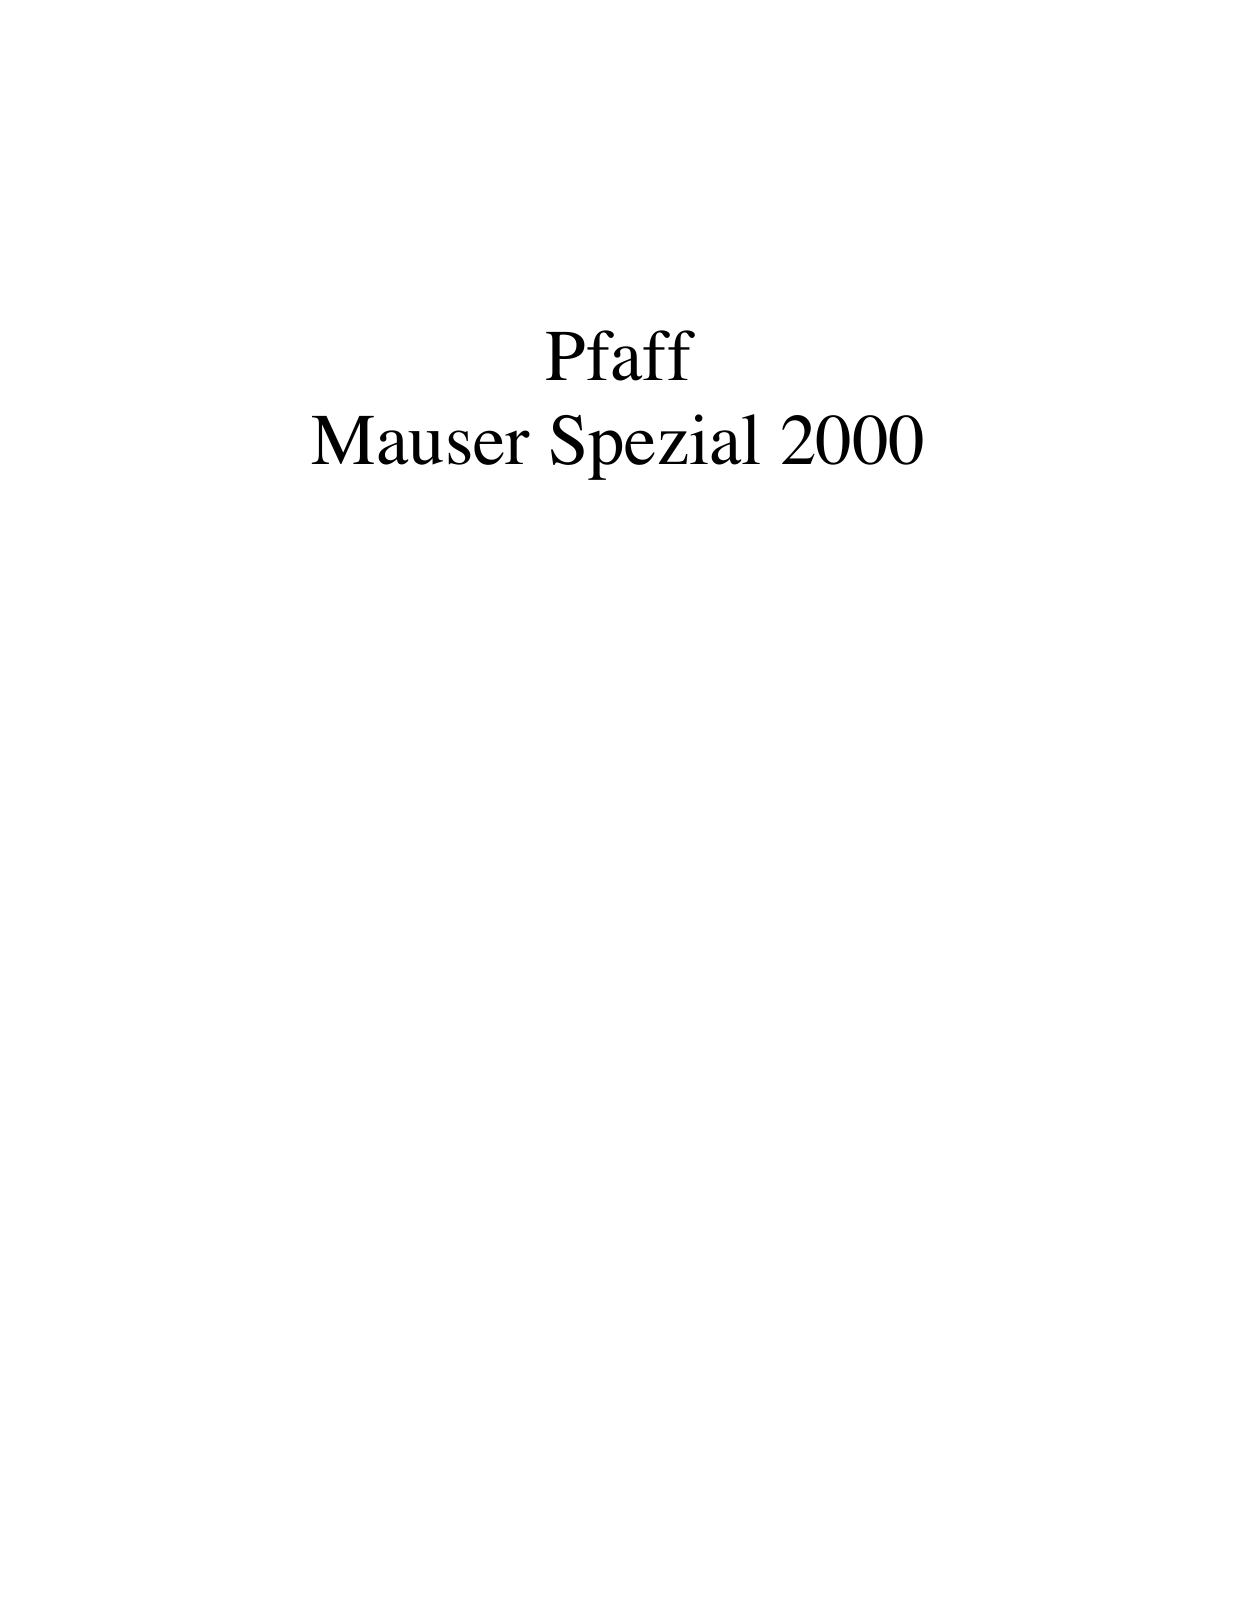 PFAFF Mauser Spezial 2000 Parts List